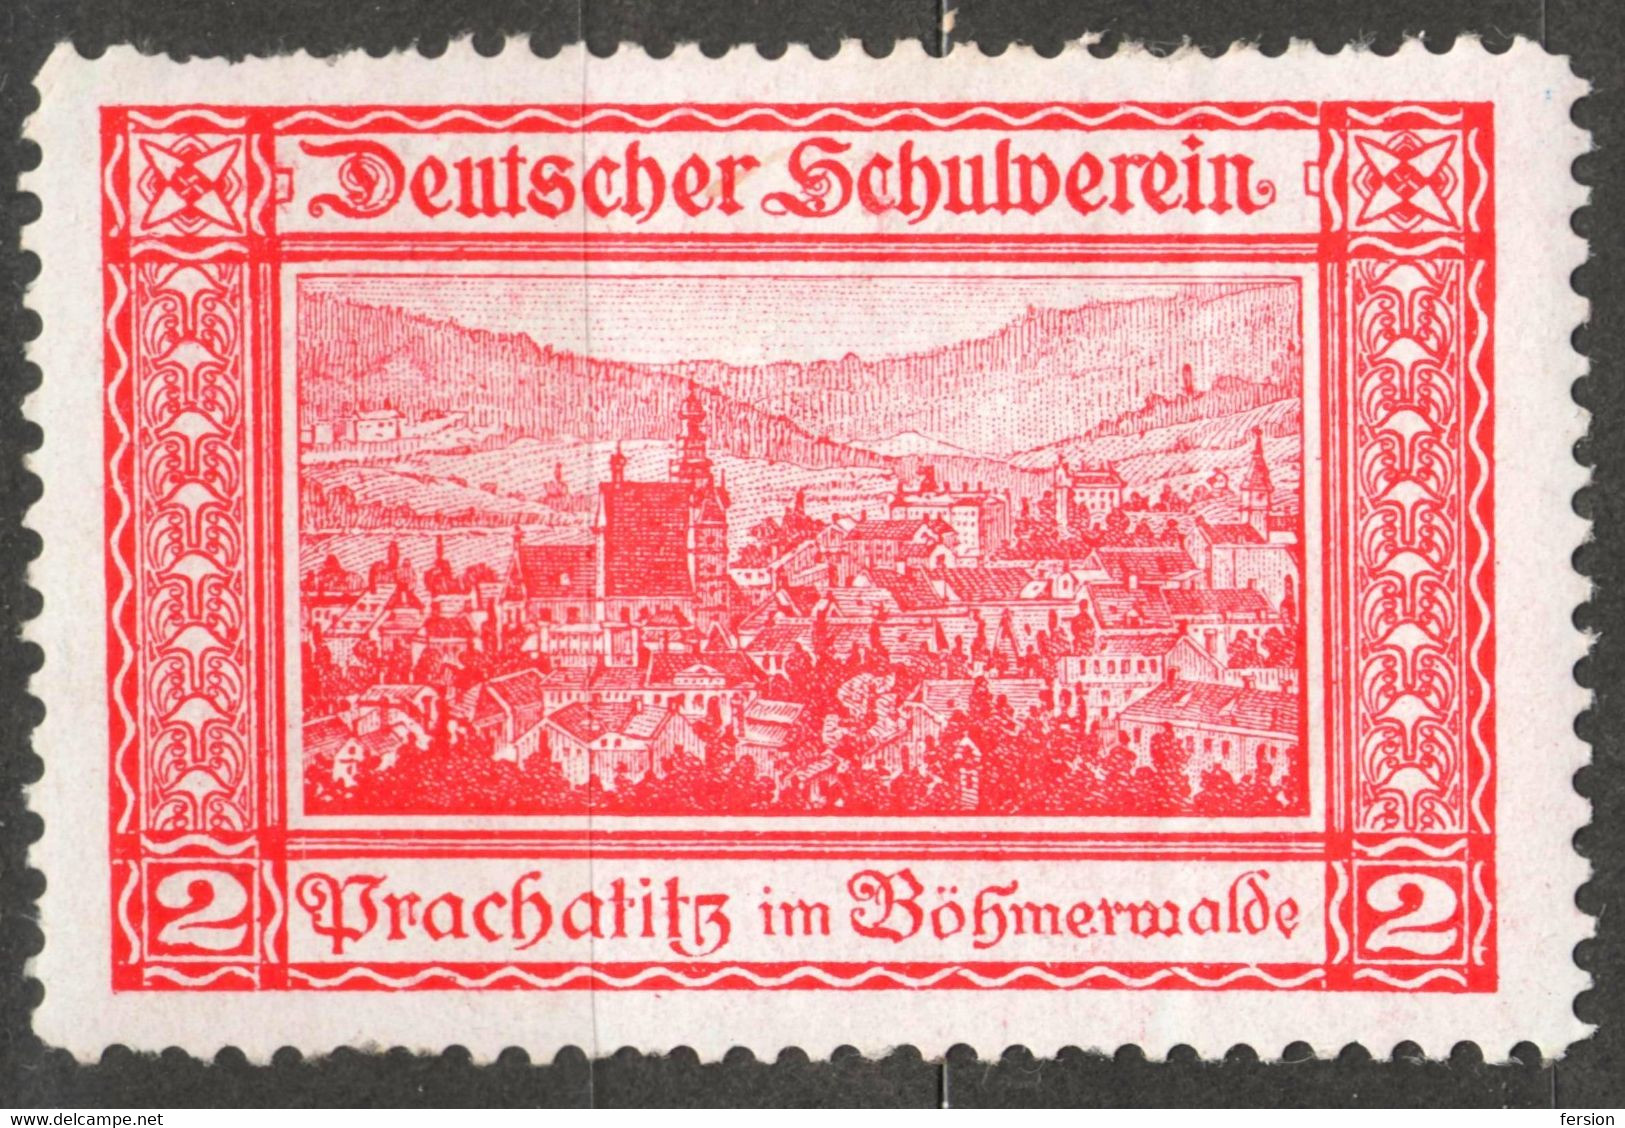 Prachatice Prachatitz CATHEDRAL Czechia Bohemia Germany Austria Label Cinderella Vignette SCHOOL Deutscher Schulverein - ...-1918 Prefilatelia